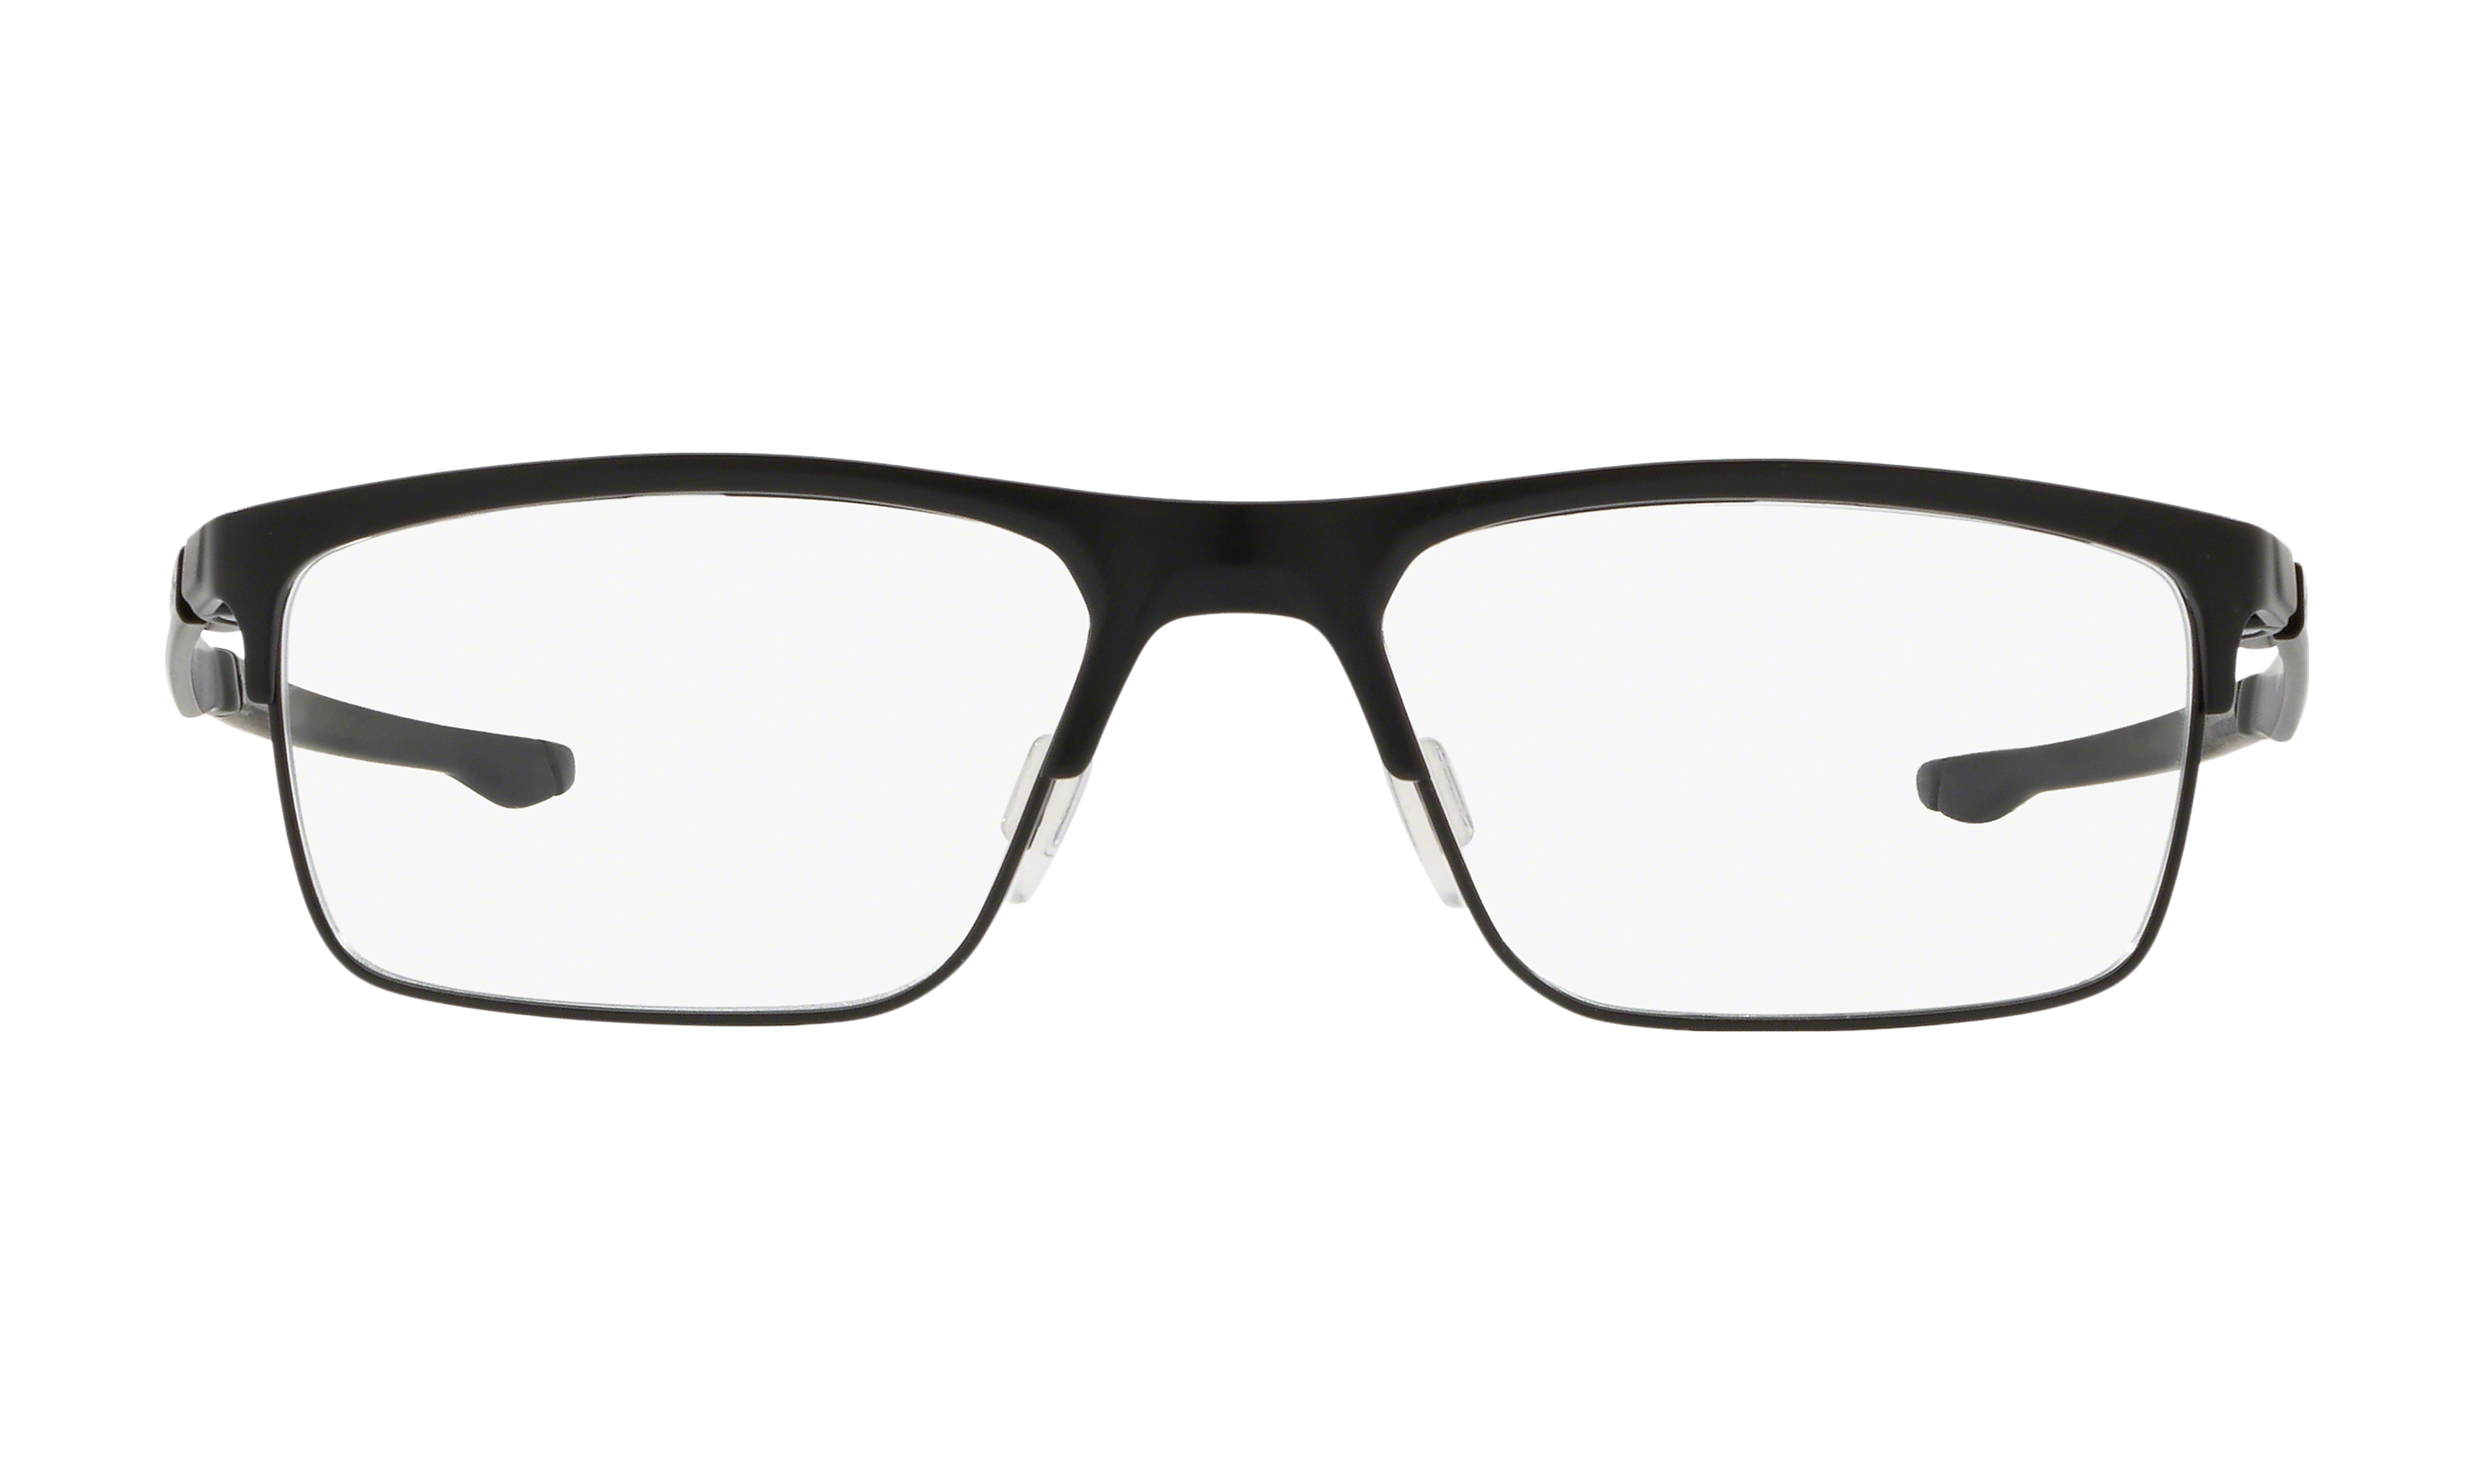 Cartridge Satin Black Eyeglasses 